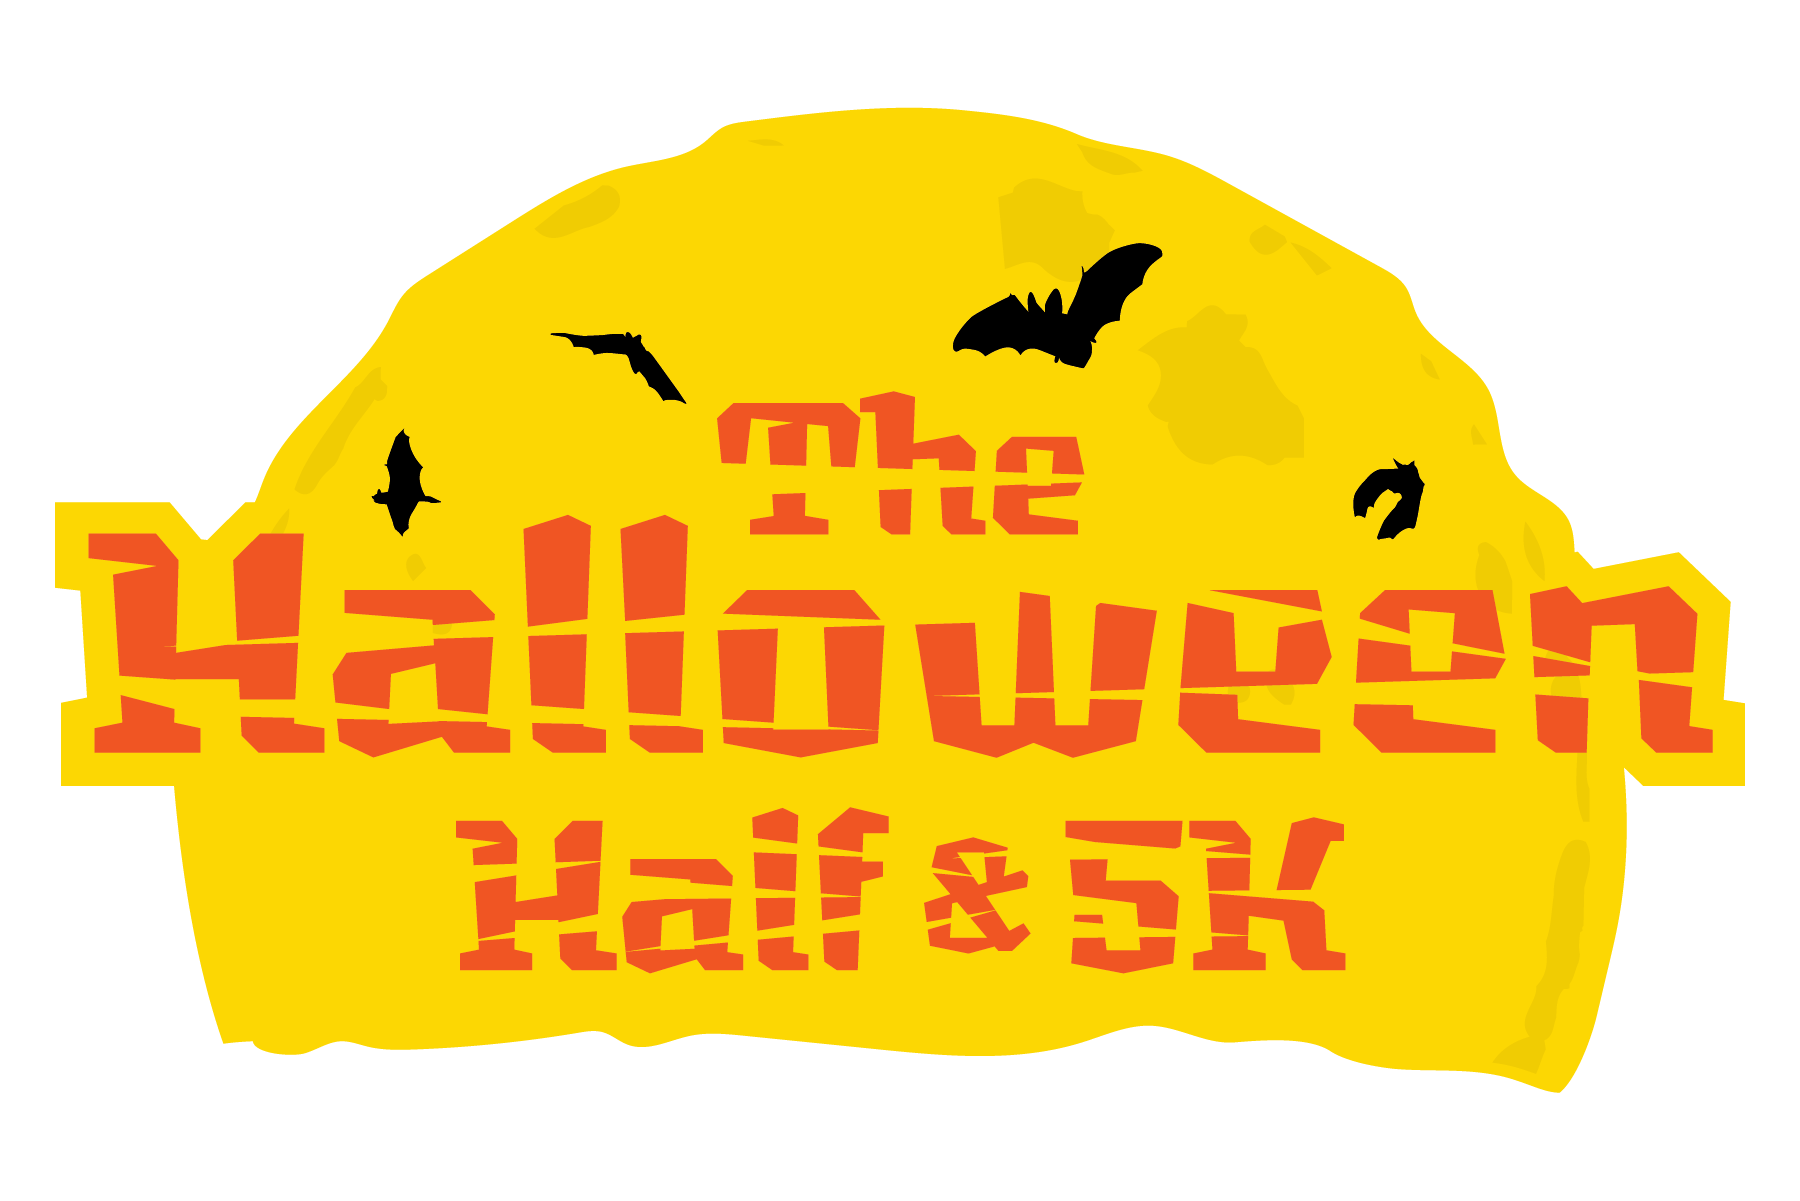 Halloween Half Fort Worth logo on RaceRaves